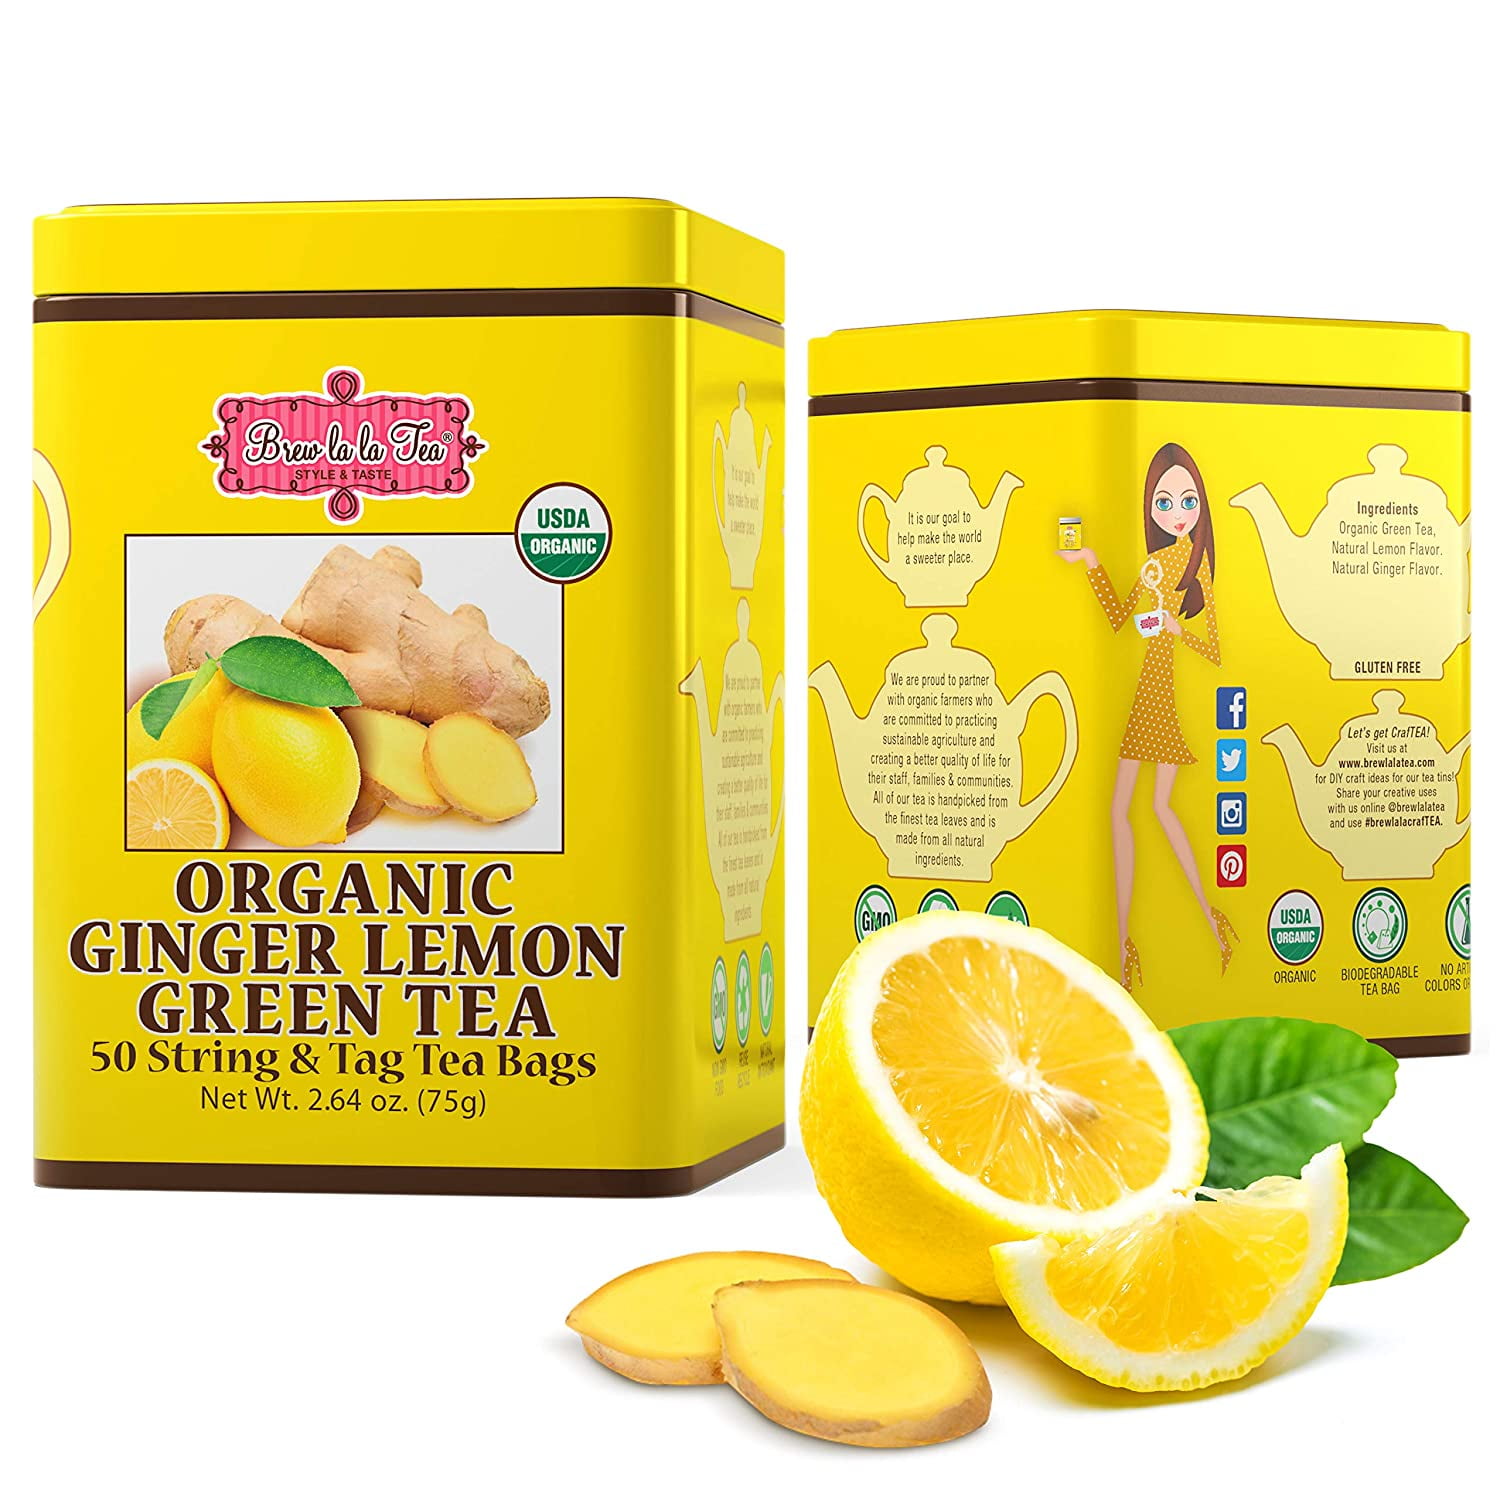 Green Tea Ginger Peach Organic Brew La La Iced Tea Hot Tea (2-Pack) 100 Tea  Bags